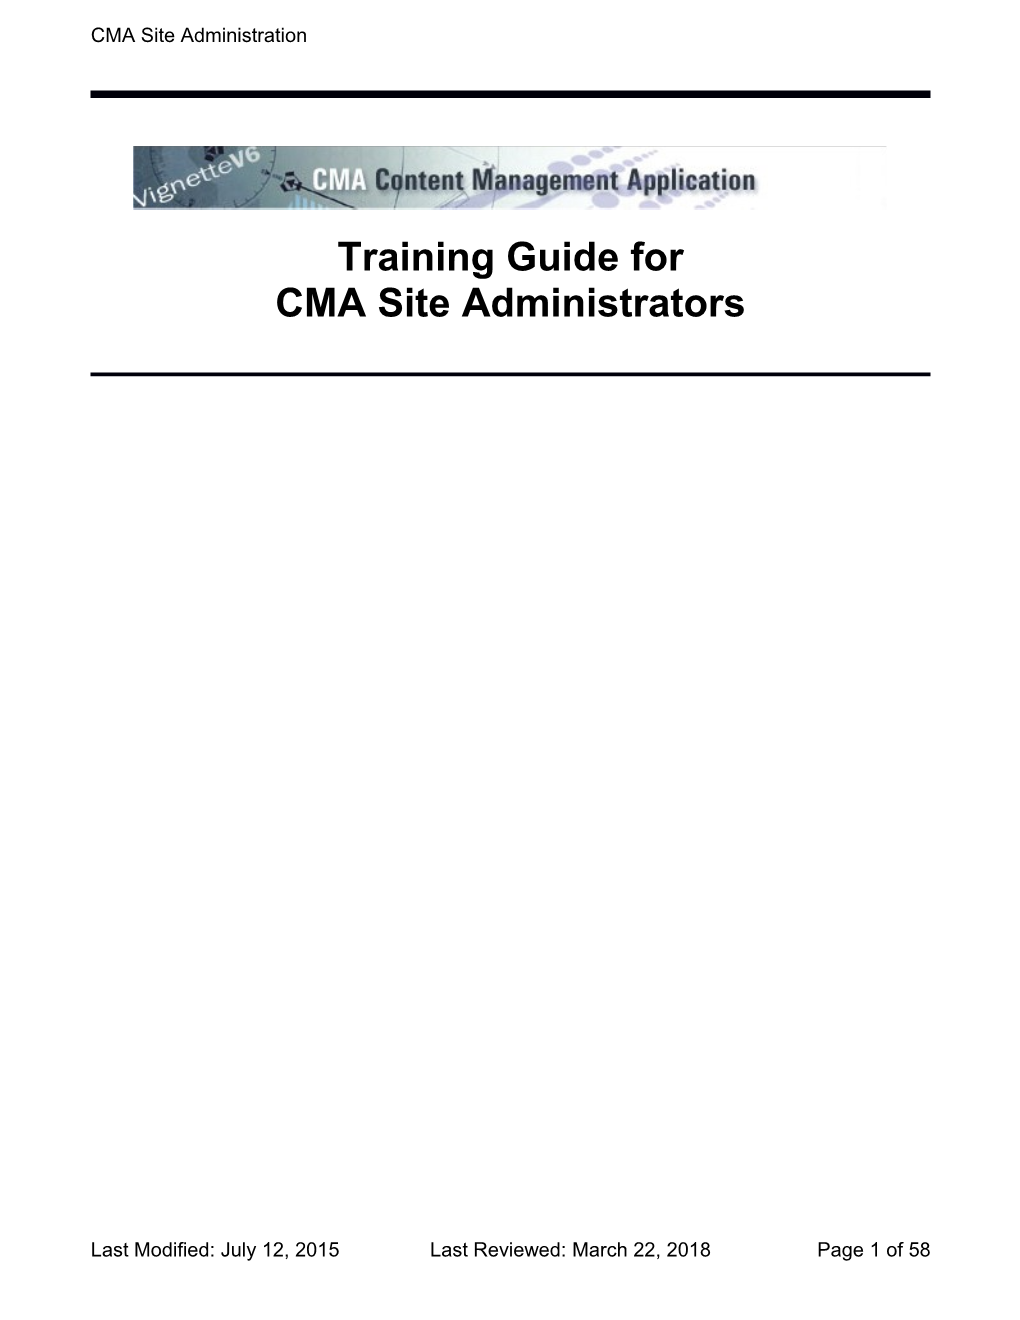 Training Guide for CMA Site Administrators